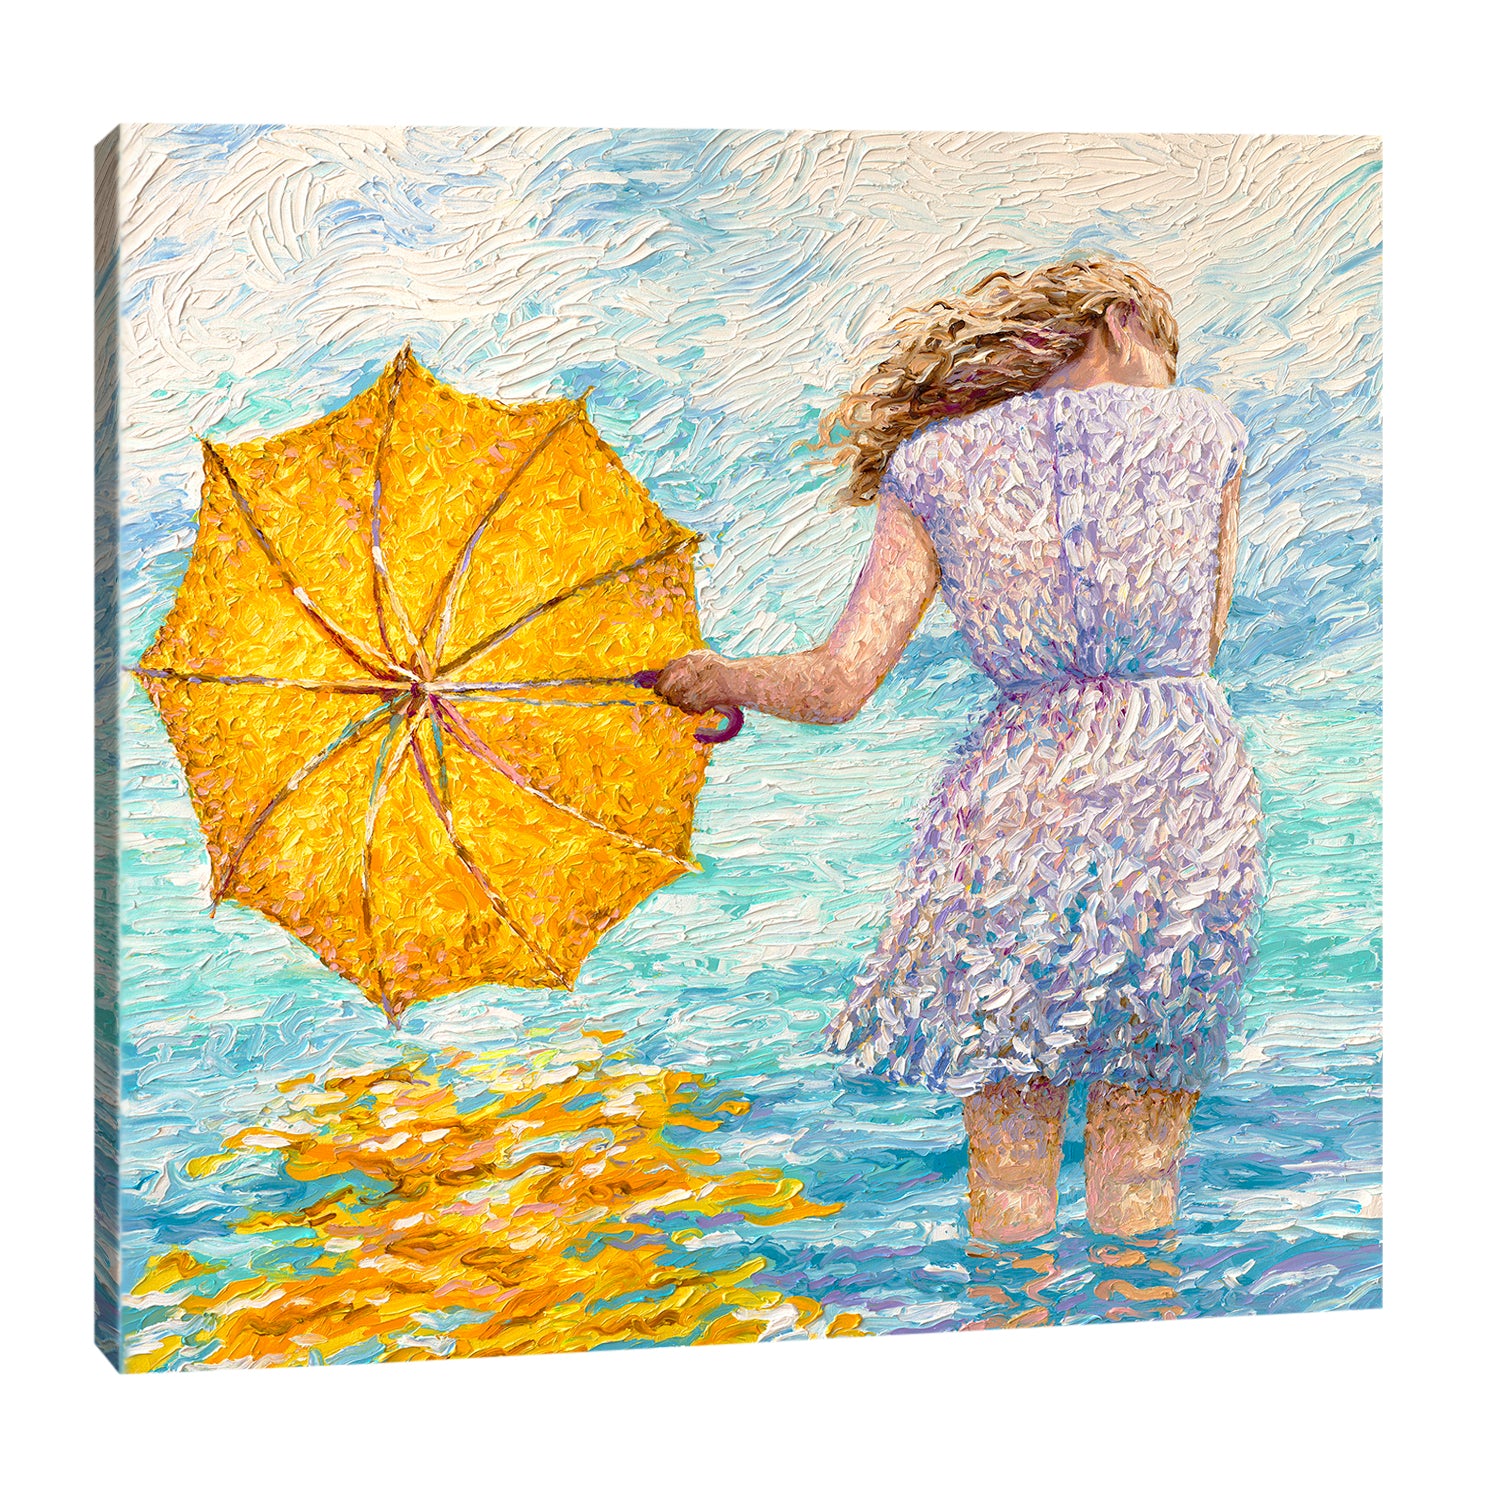 Iris-Scott,Modern & Contemporary,People,woman,women,dress,white dress,umbrella,yellow,water,